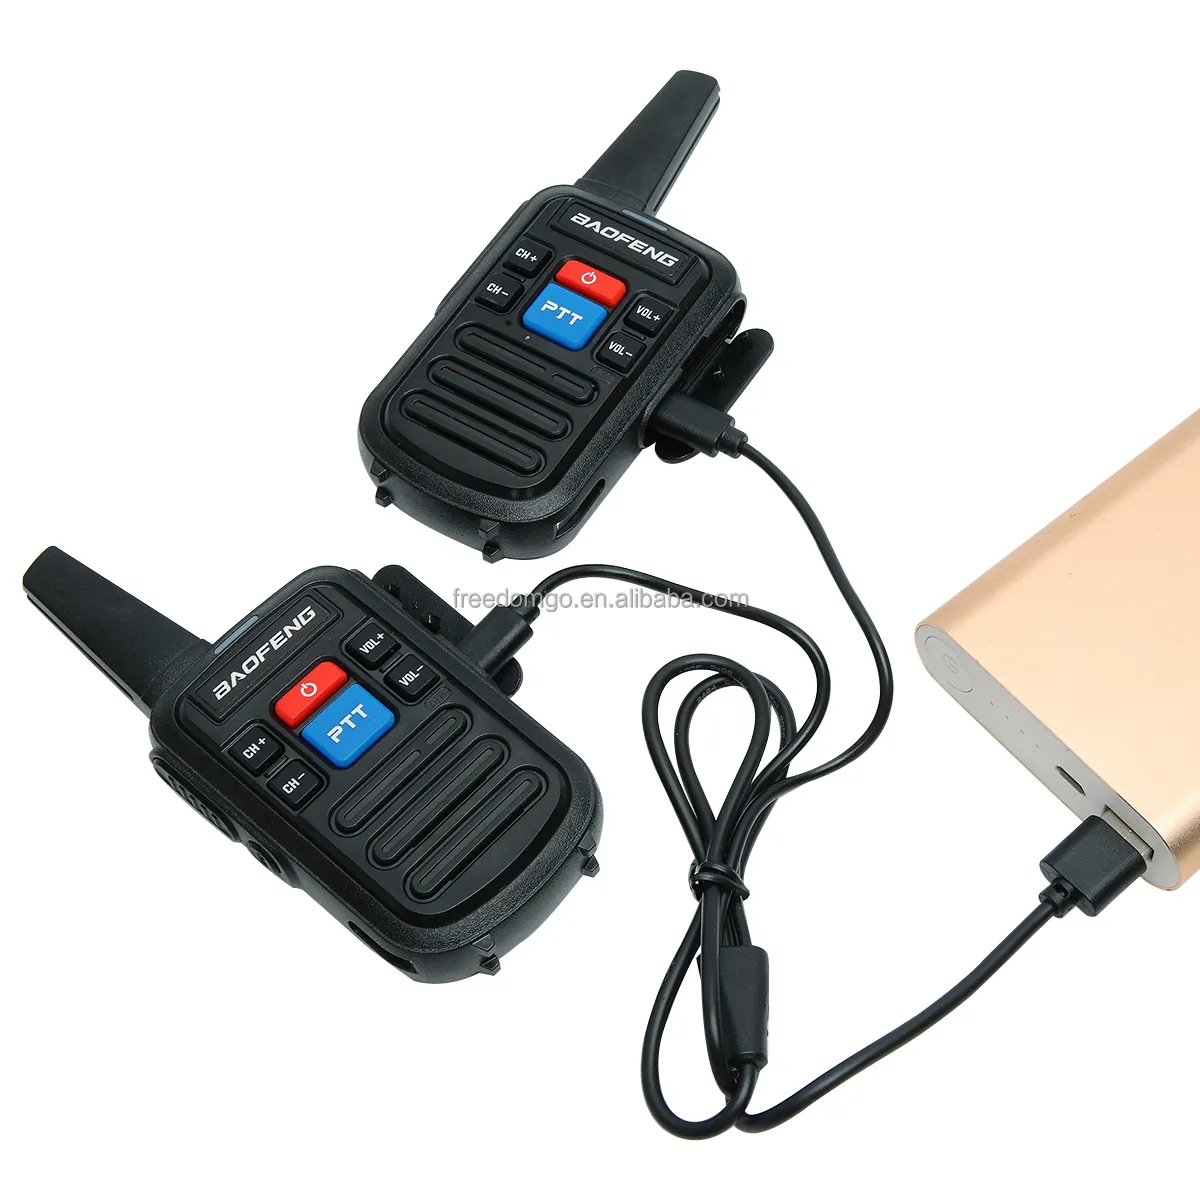 BAO FENG BF-C50 dapat diprogram oleh PC Bilingual switch antara bahasa Mandarin dan Inggris mikro USB handheld walkie-talkie